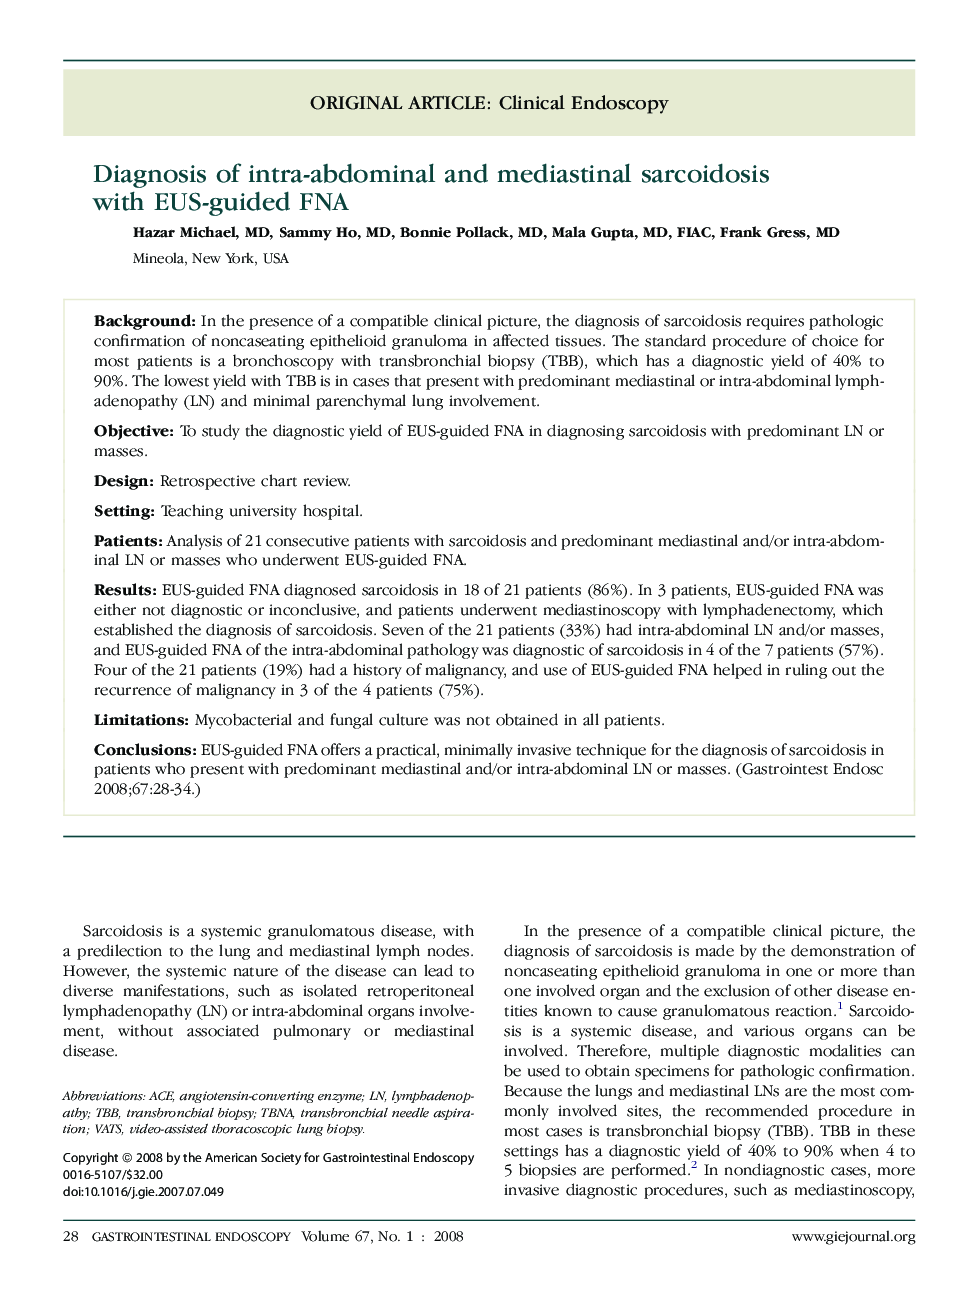 Diagnosis of intra-abdominal and mediastinal sarcoidosis with EUS-guided FNA